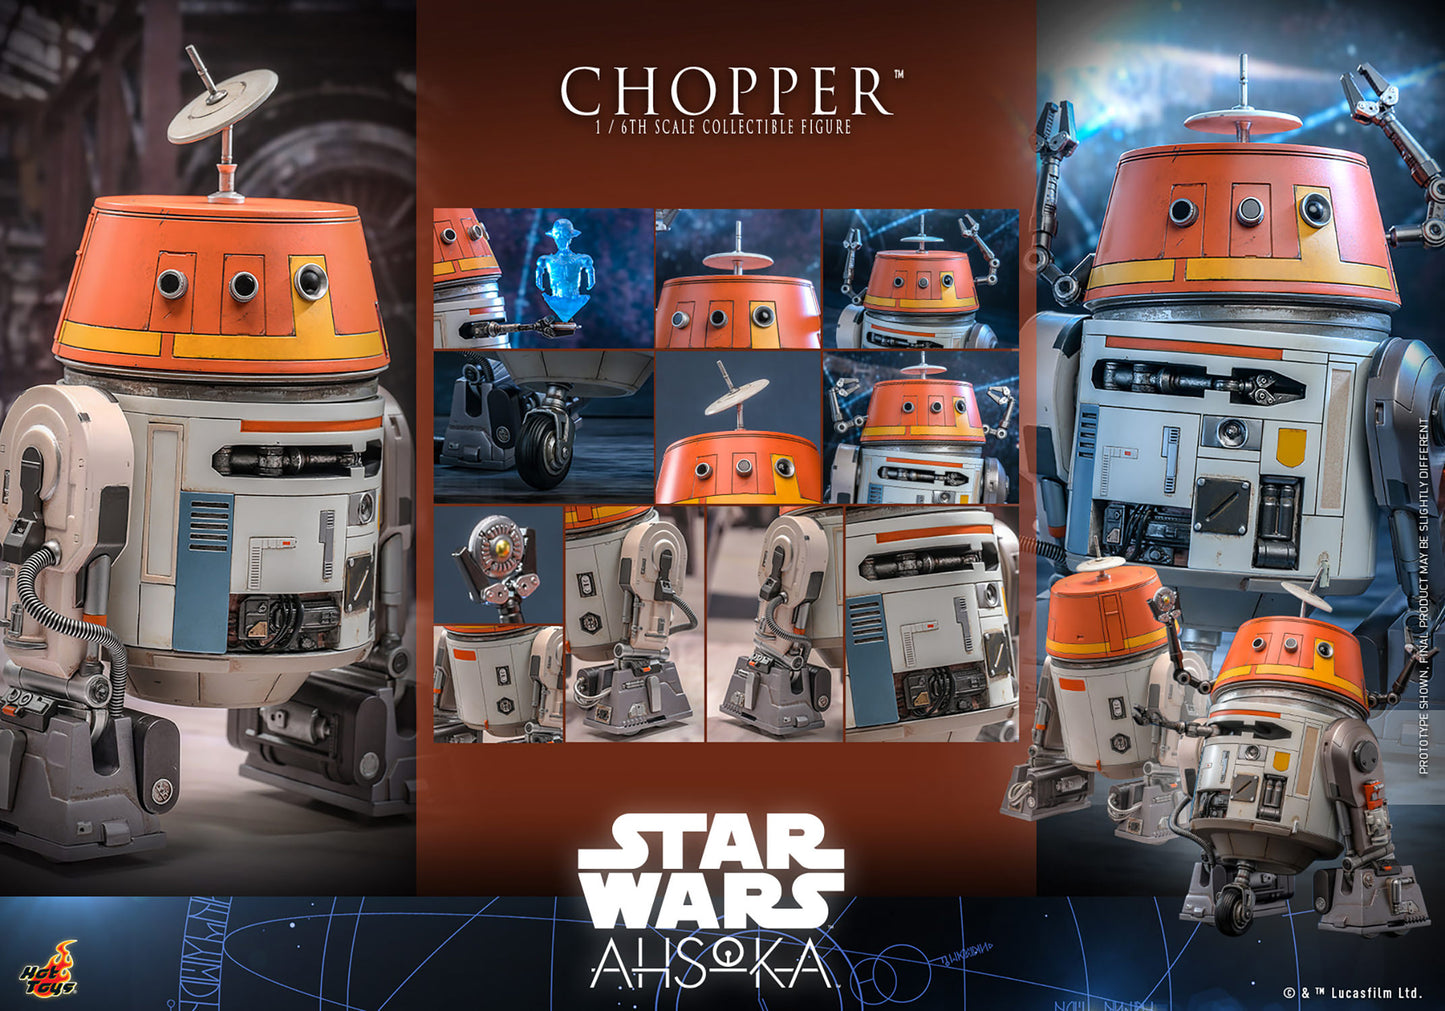 Chopper 1/6 Scale Figure by Hot Toys